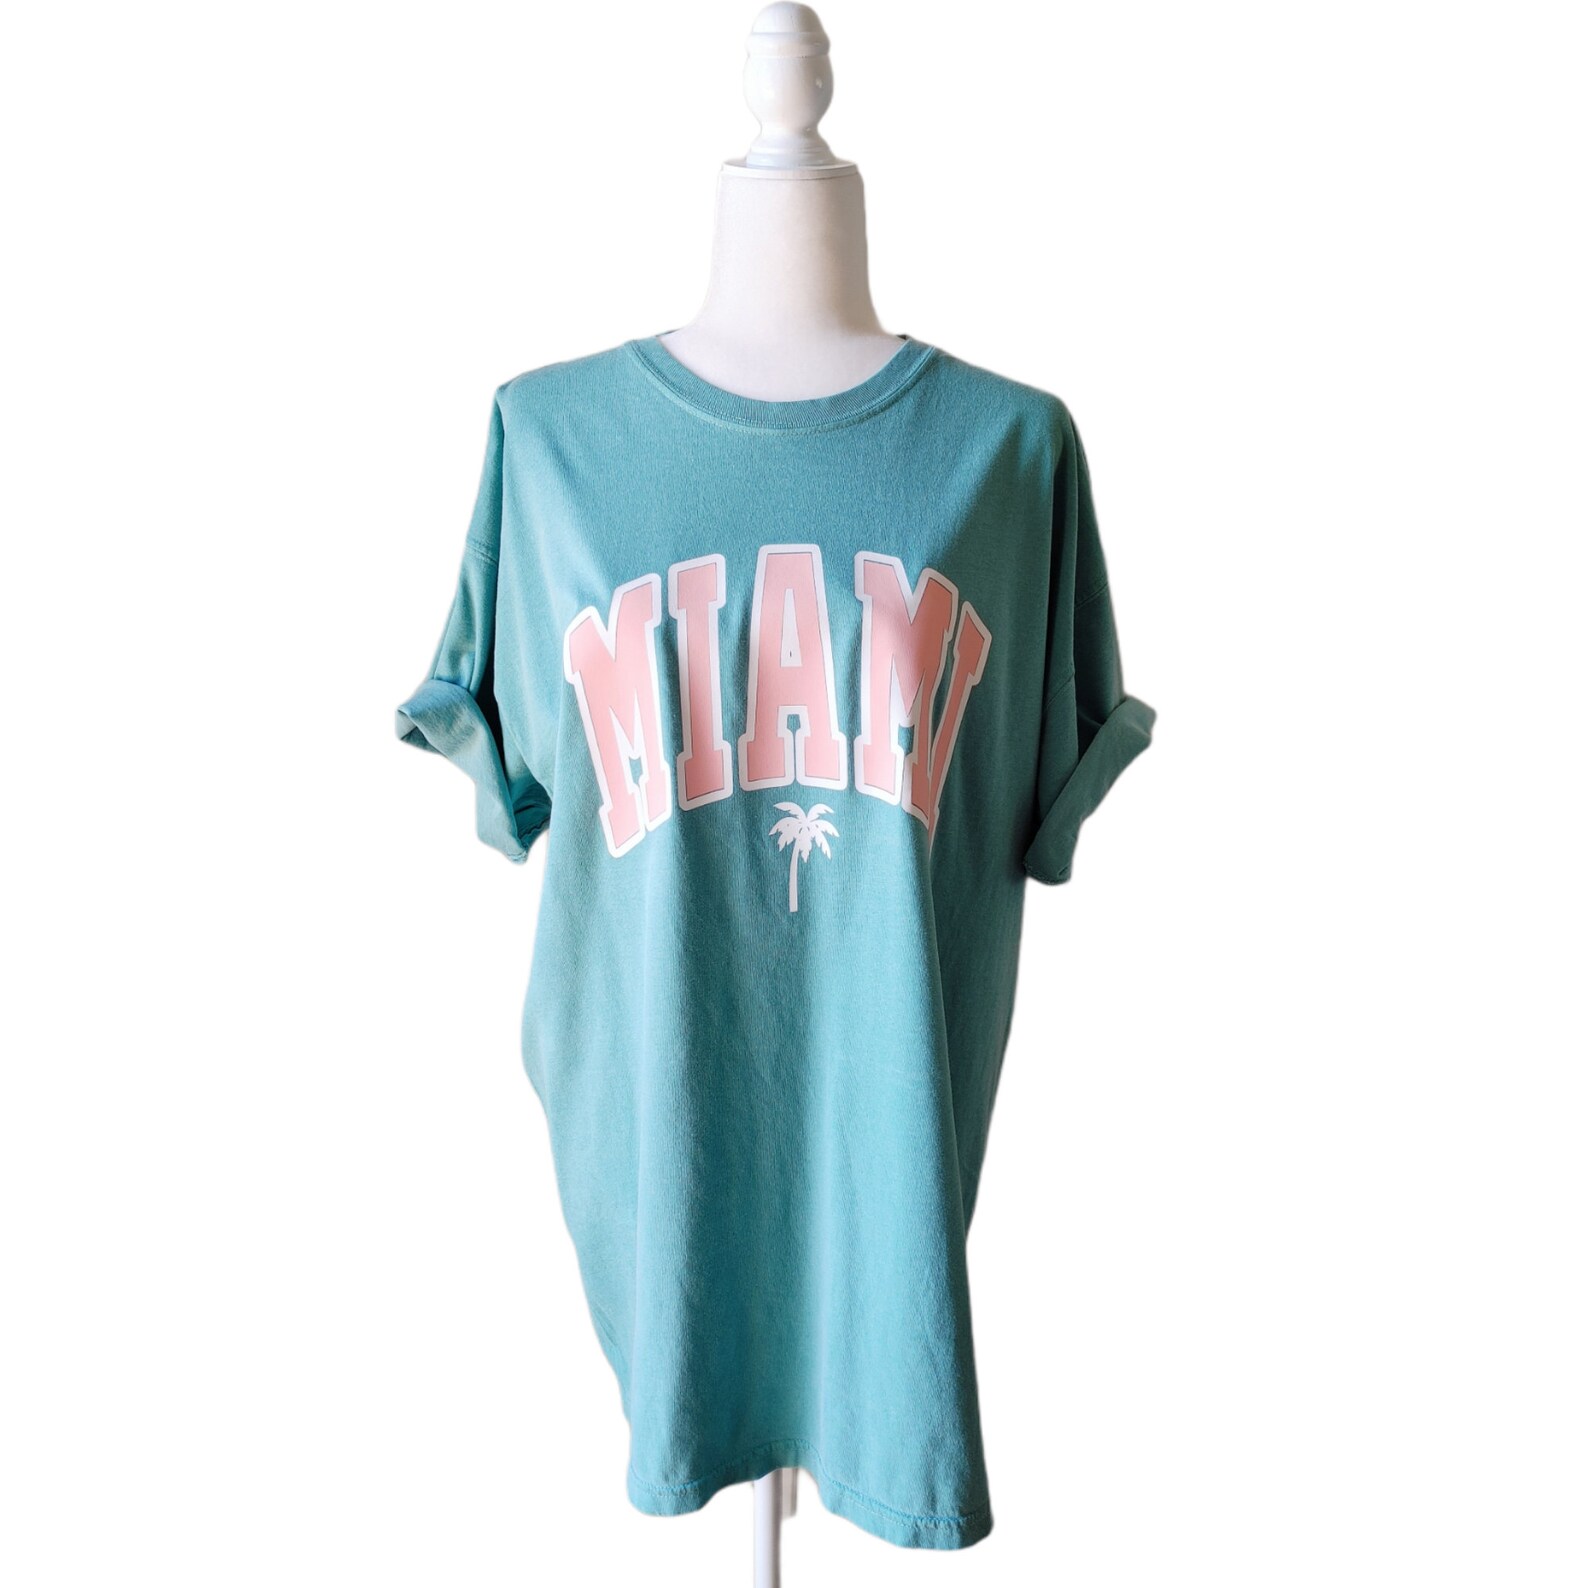 Miami Tshirt Florida Palm Tee Summer Island Beach Shirt | Etsy